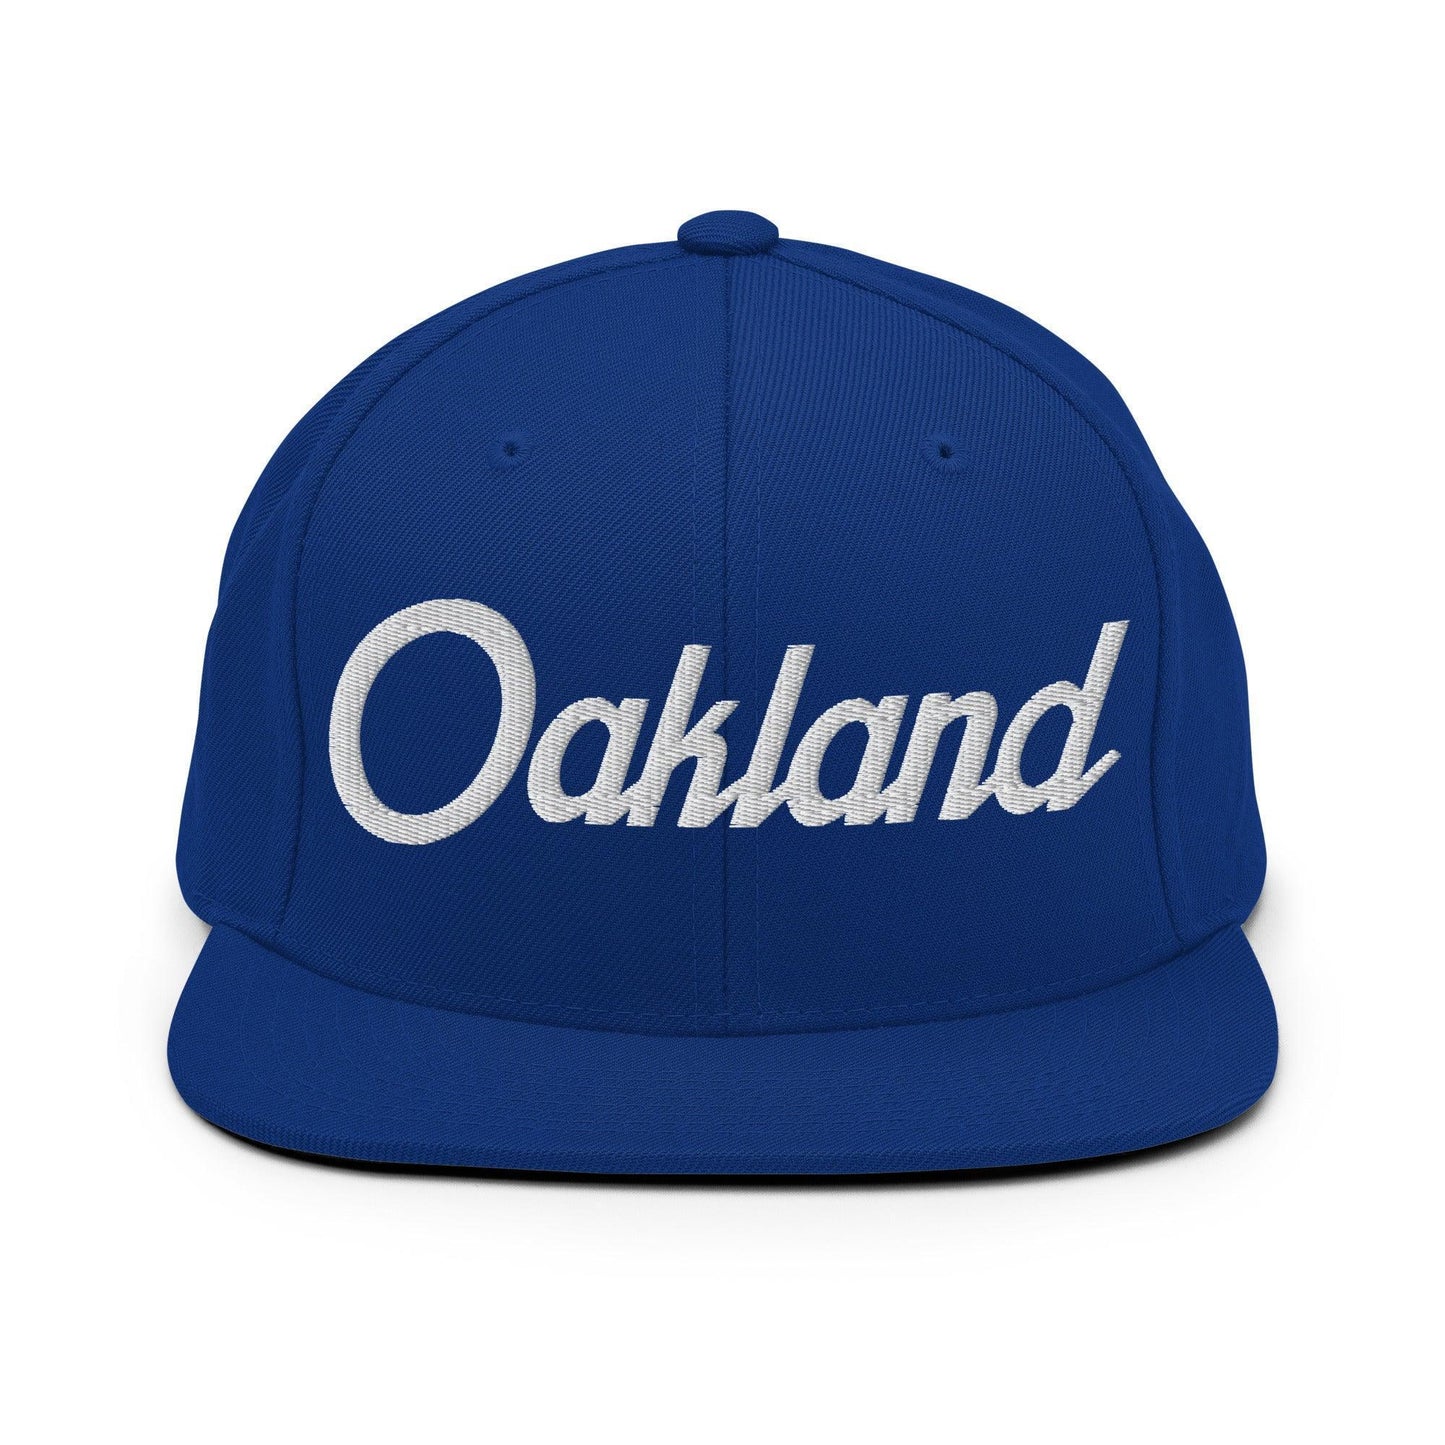 Oakland Script Snapback Hat Royal Blue